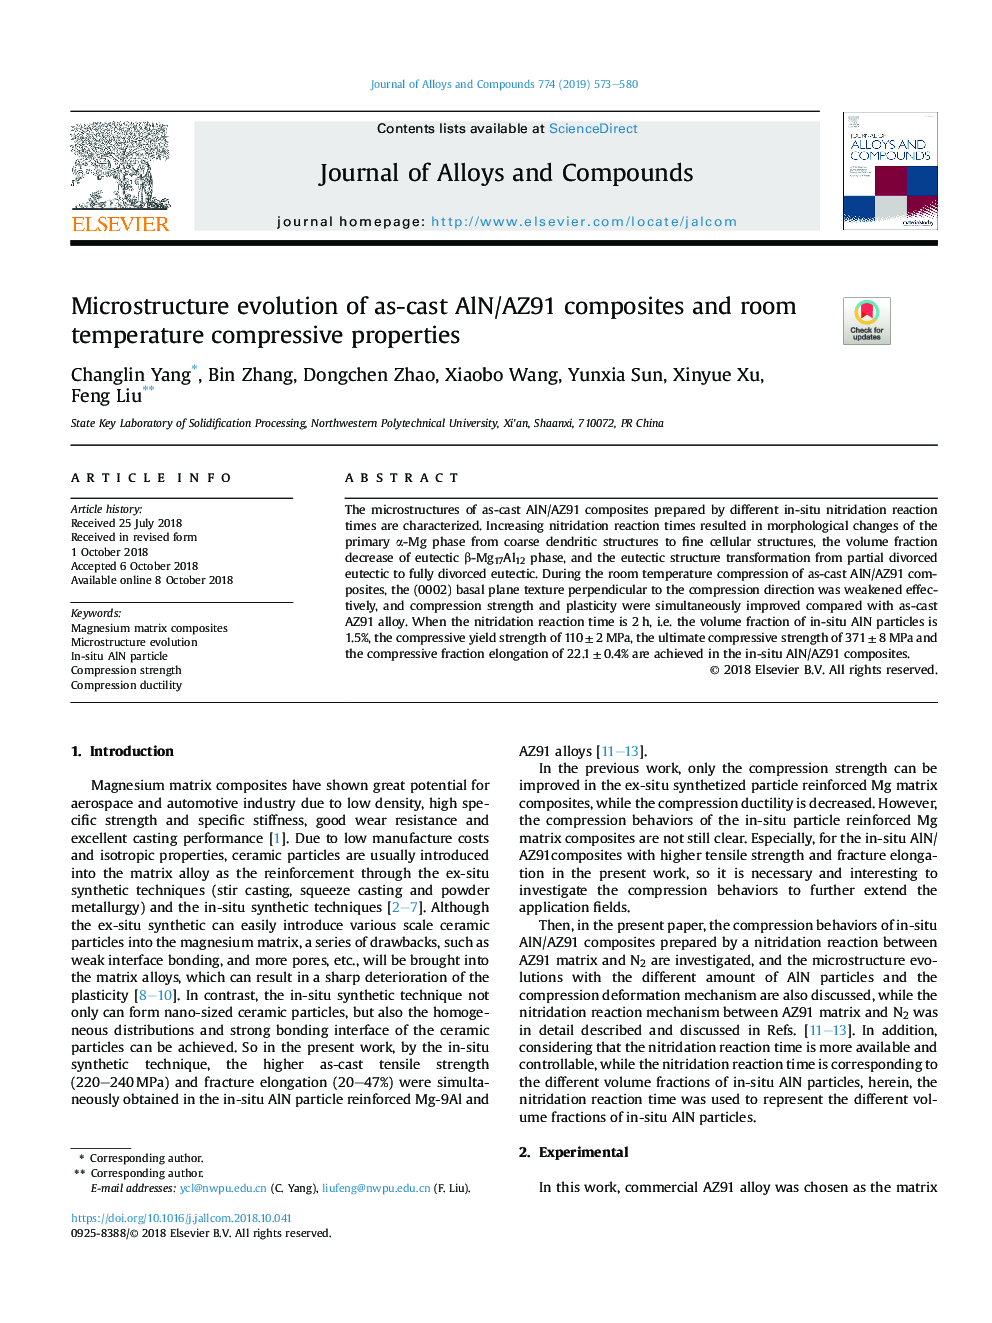 Microstructure evolution of as-cast AlN/AZ91 composites and room temperature compressive properties